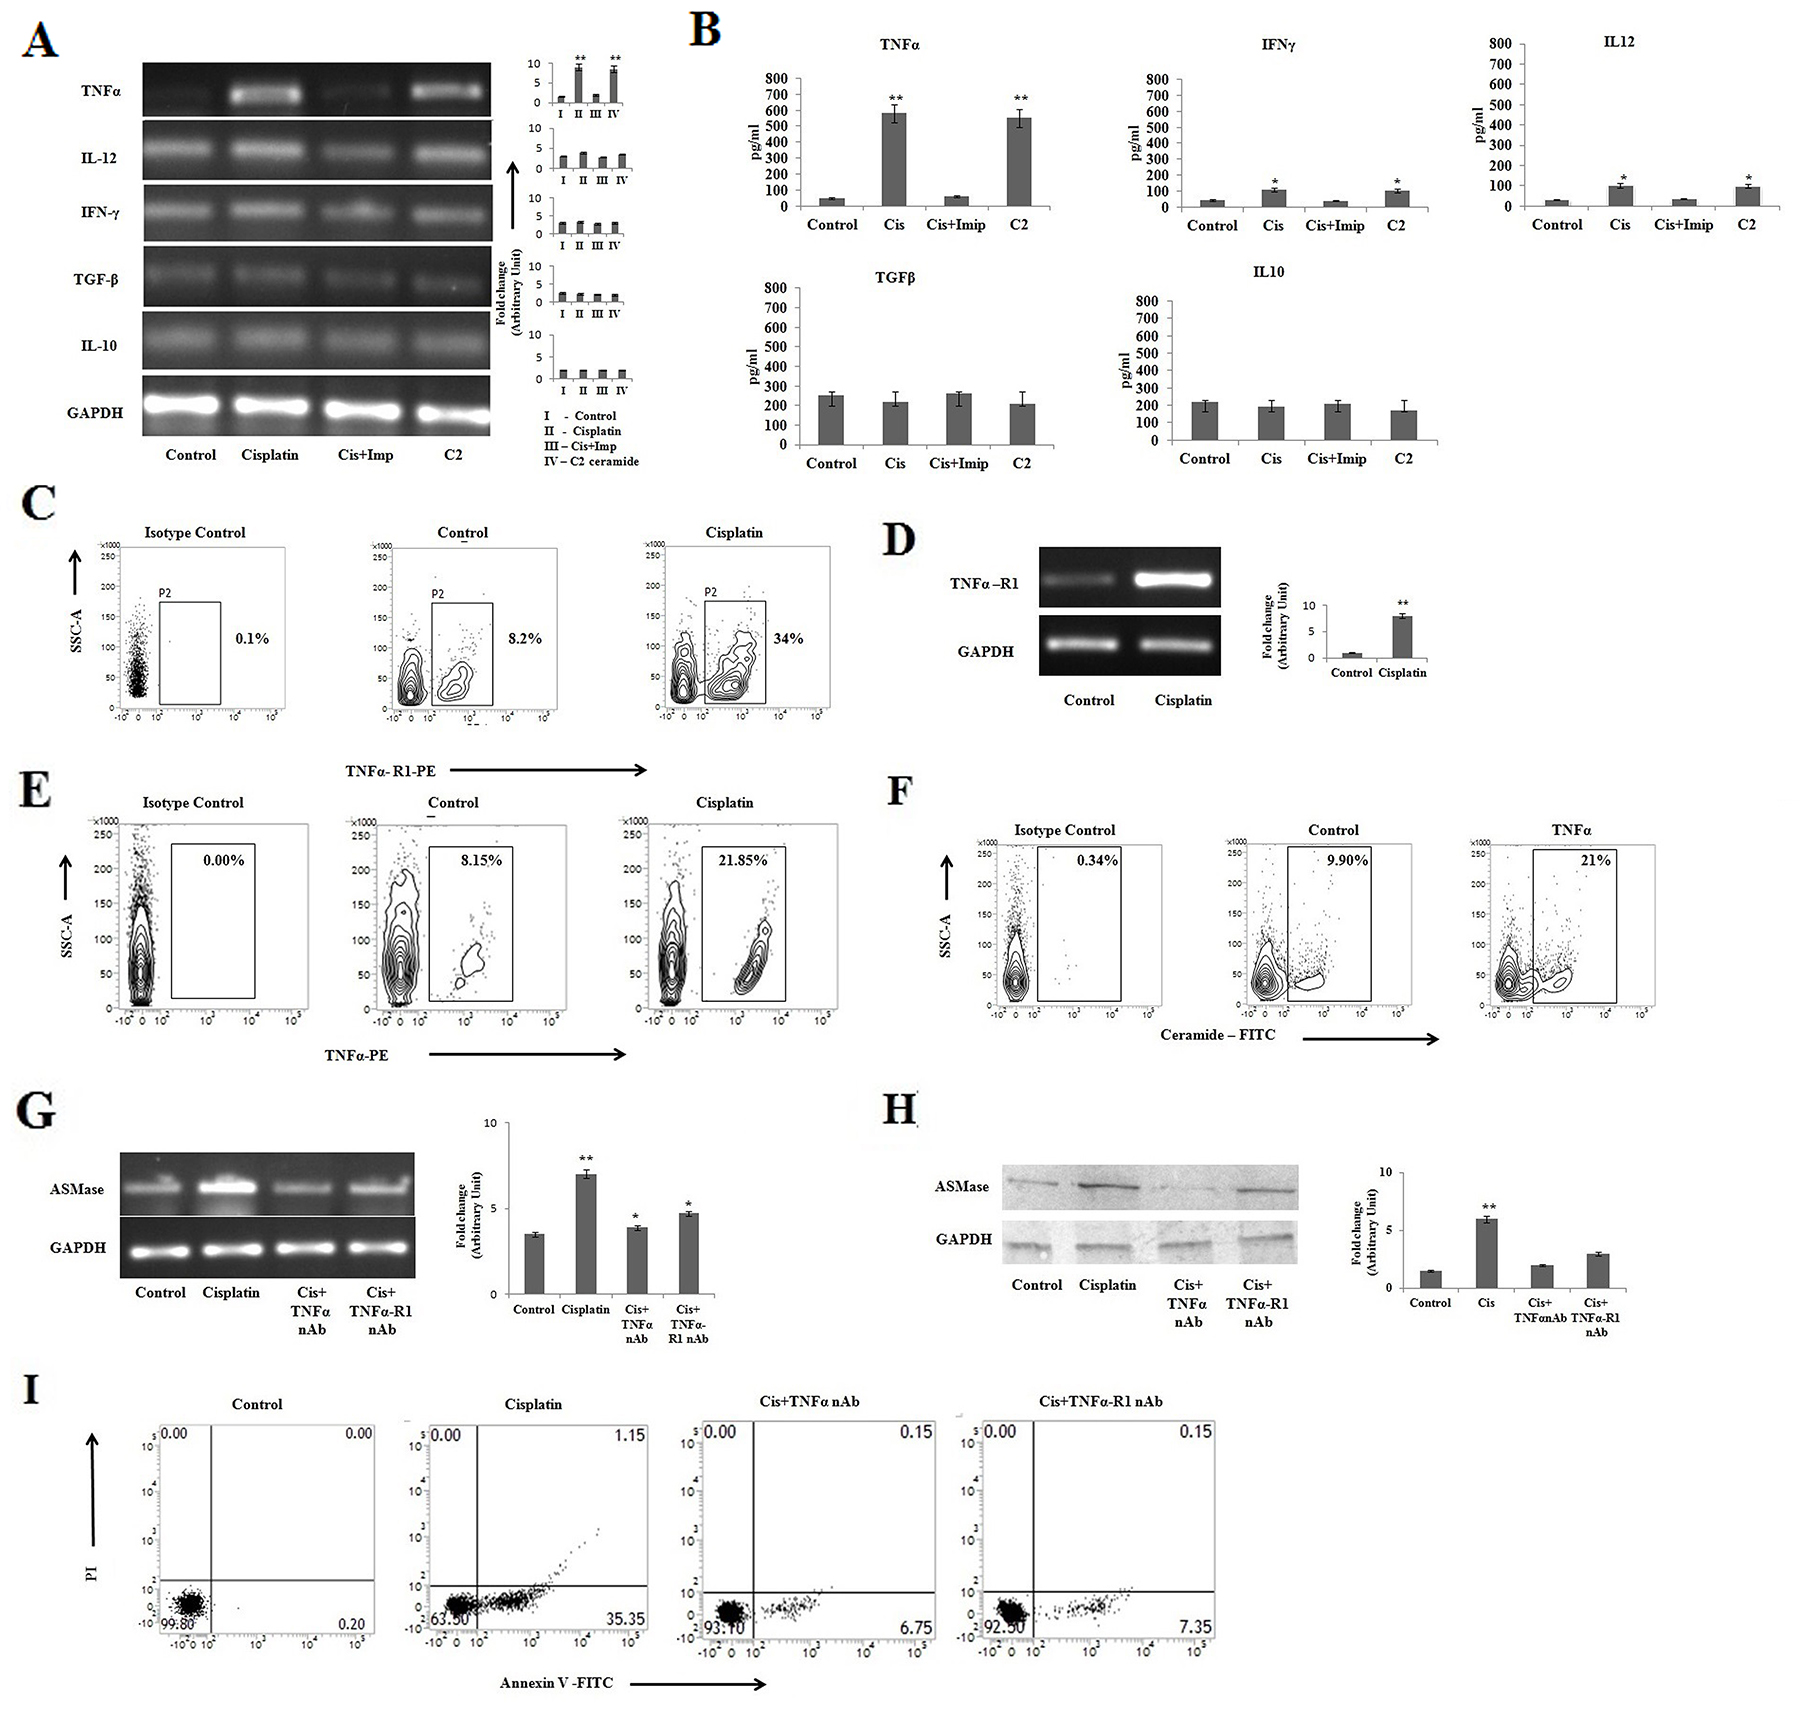 Cisplatin induces apoptosis in PKC&#x03B4; silenced B16F10 cells by TNF&#x03B1; mediated pathway.